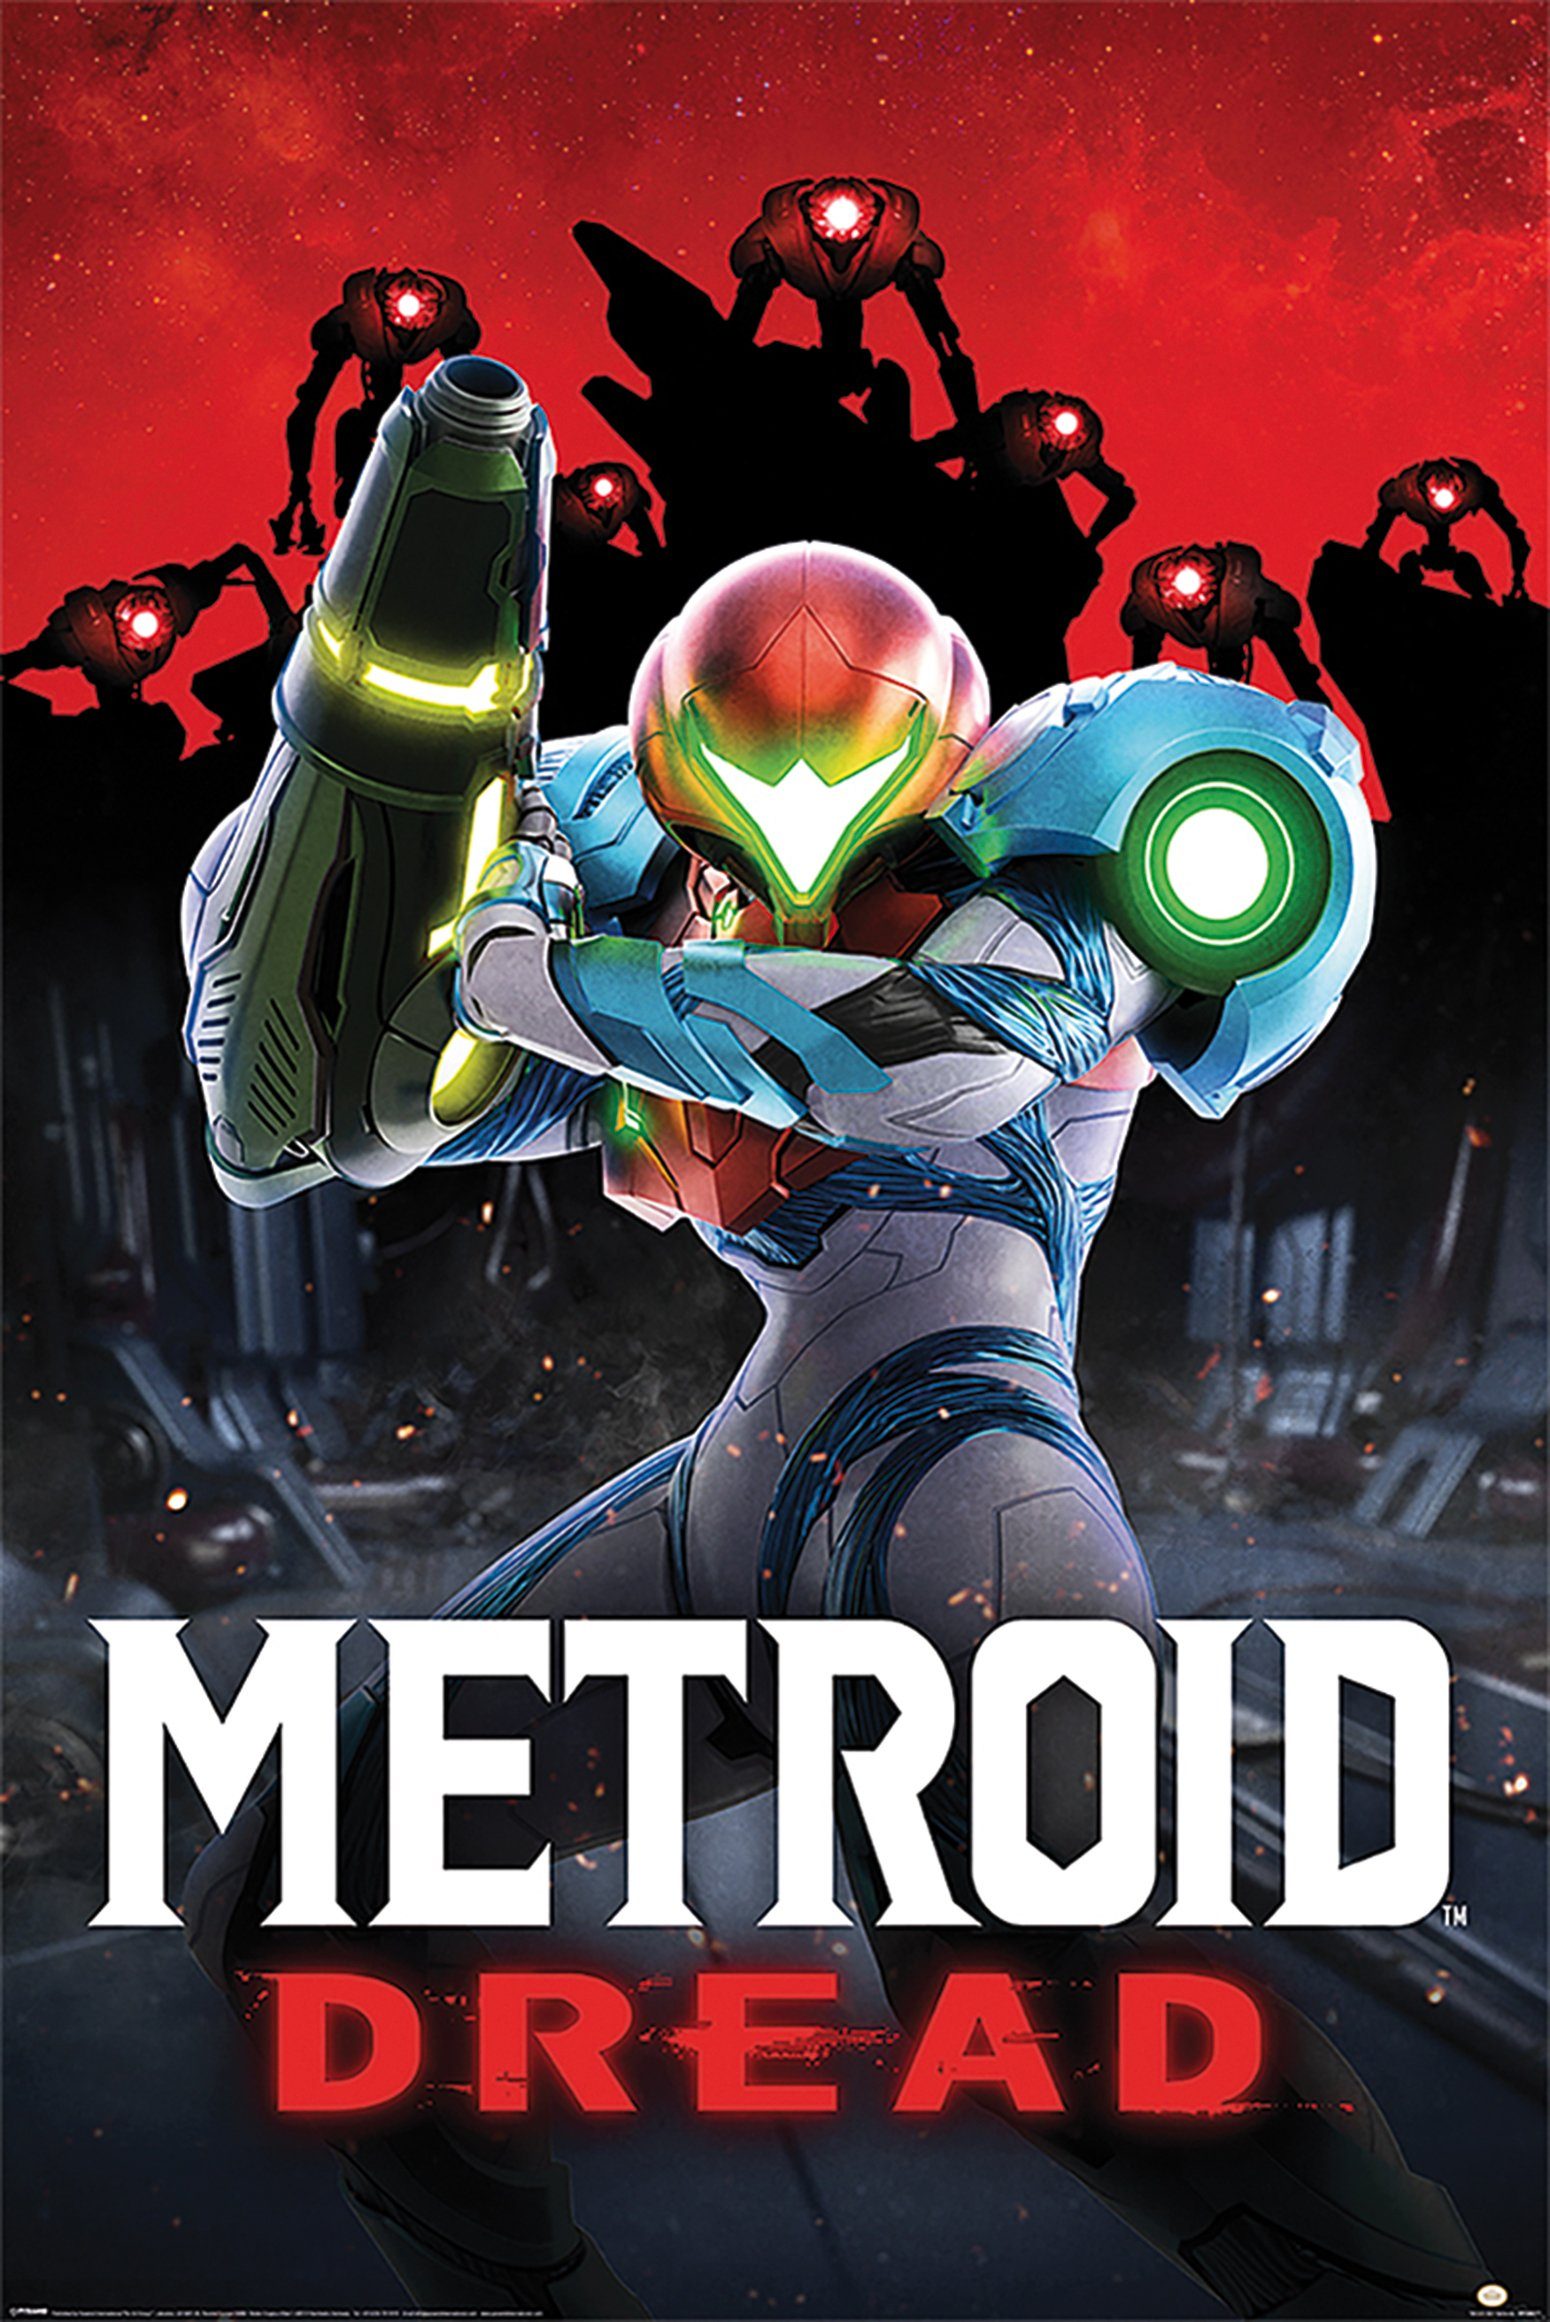 PYRAMID Poster Metroid Dread Poster Shadows 61 x 91,5 cm